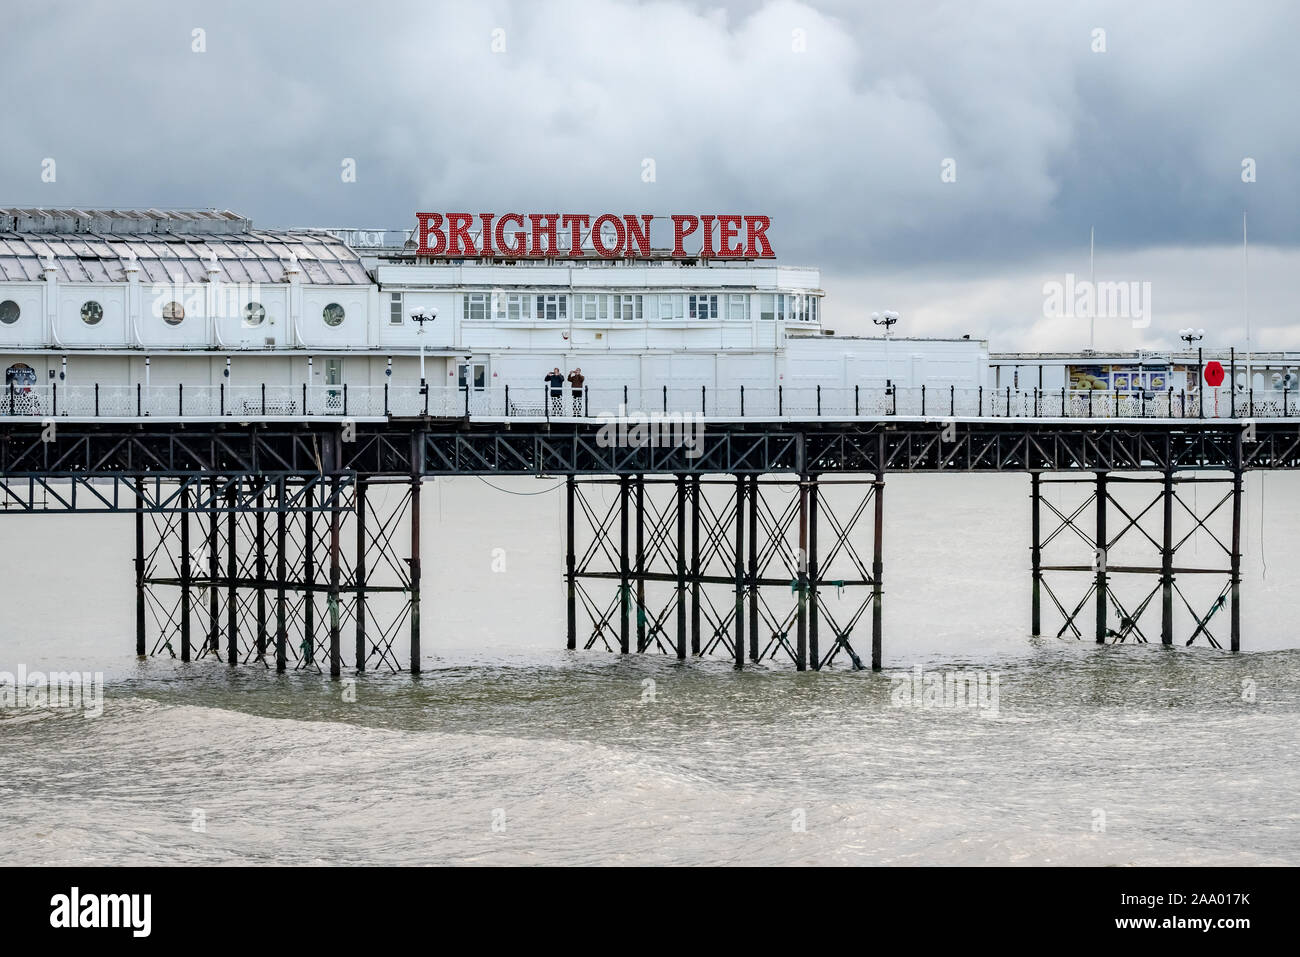 Die Brighton Palace Pier, die gemeinhin als Brighton Pier oder der Palace Pier bekannt ist ein Denkmalgeschütztes Pleasure Pier in Brighton, England, UK. Stockfoto